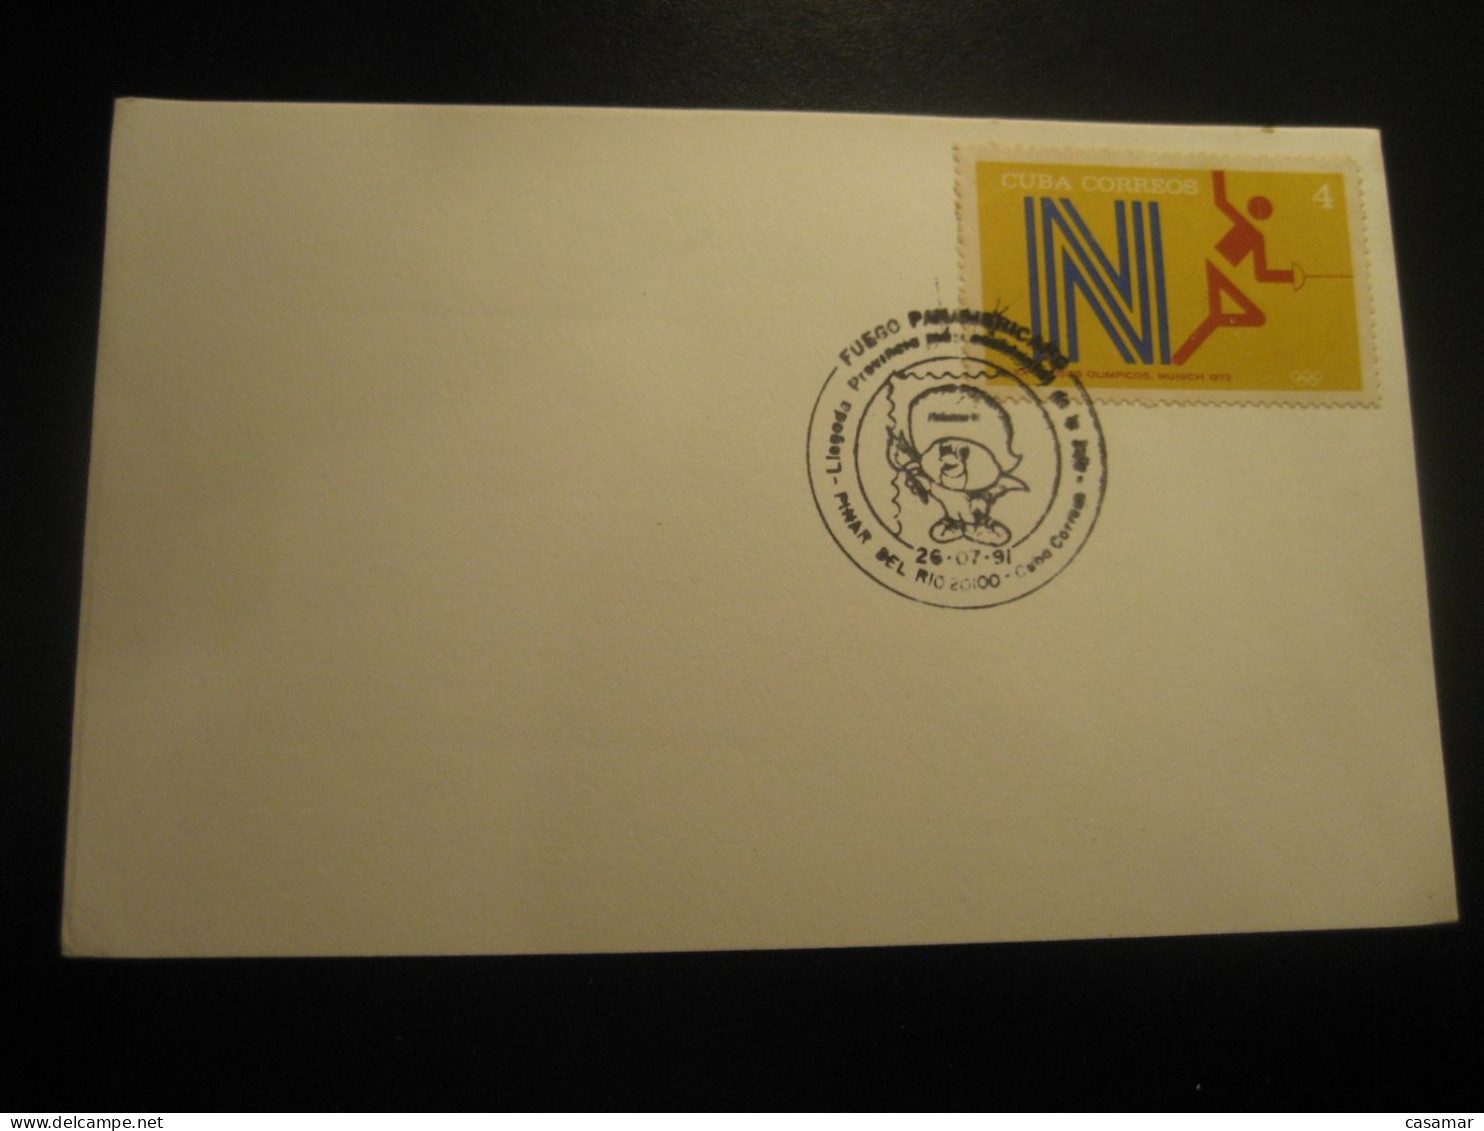 PINAR DEL RIO 1991 Fencing Escrime Munchen Munich Olympic Games Olympics Stamp Cancel Card - Esgrima